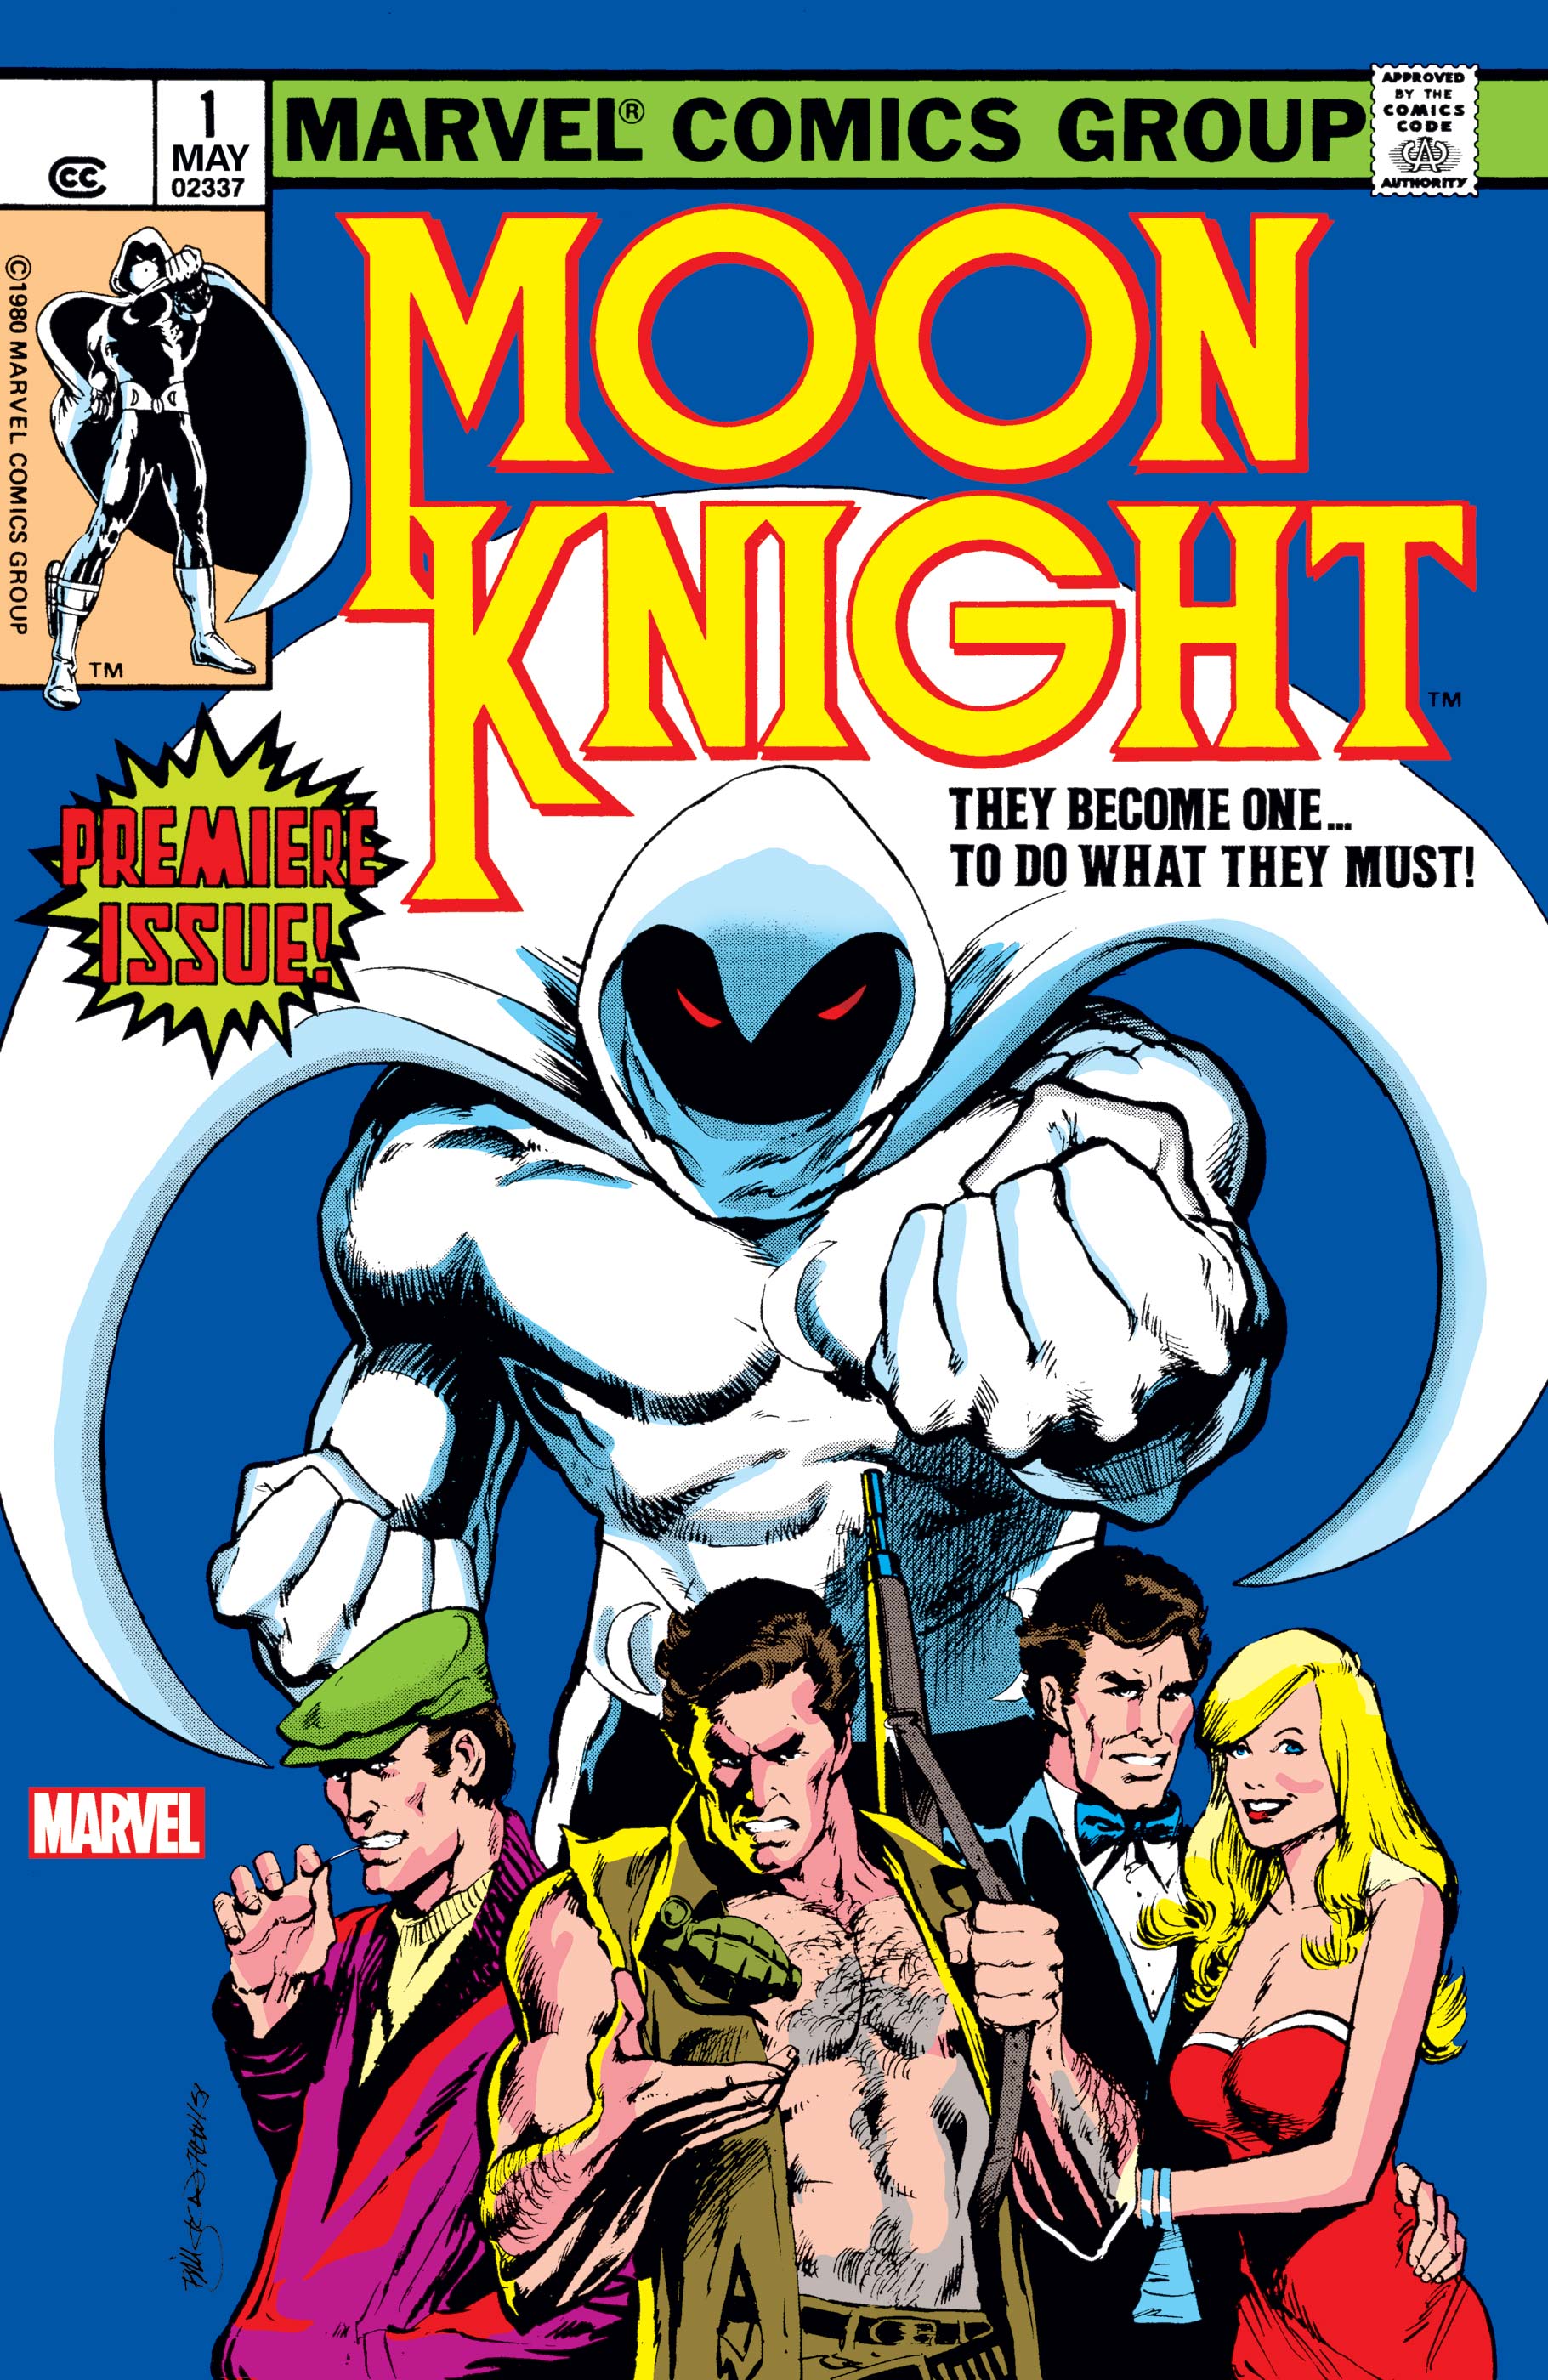 Moon Knight Facsimile Edition (2022) #1